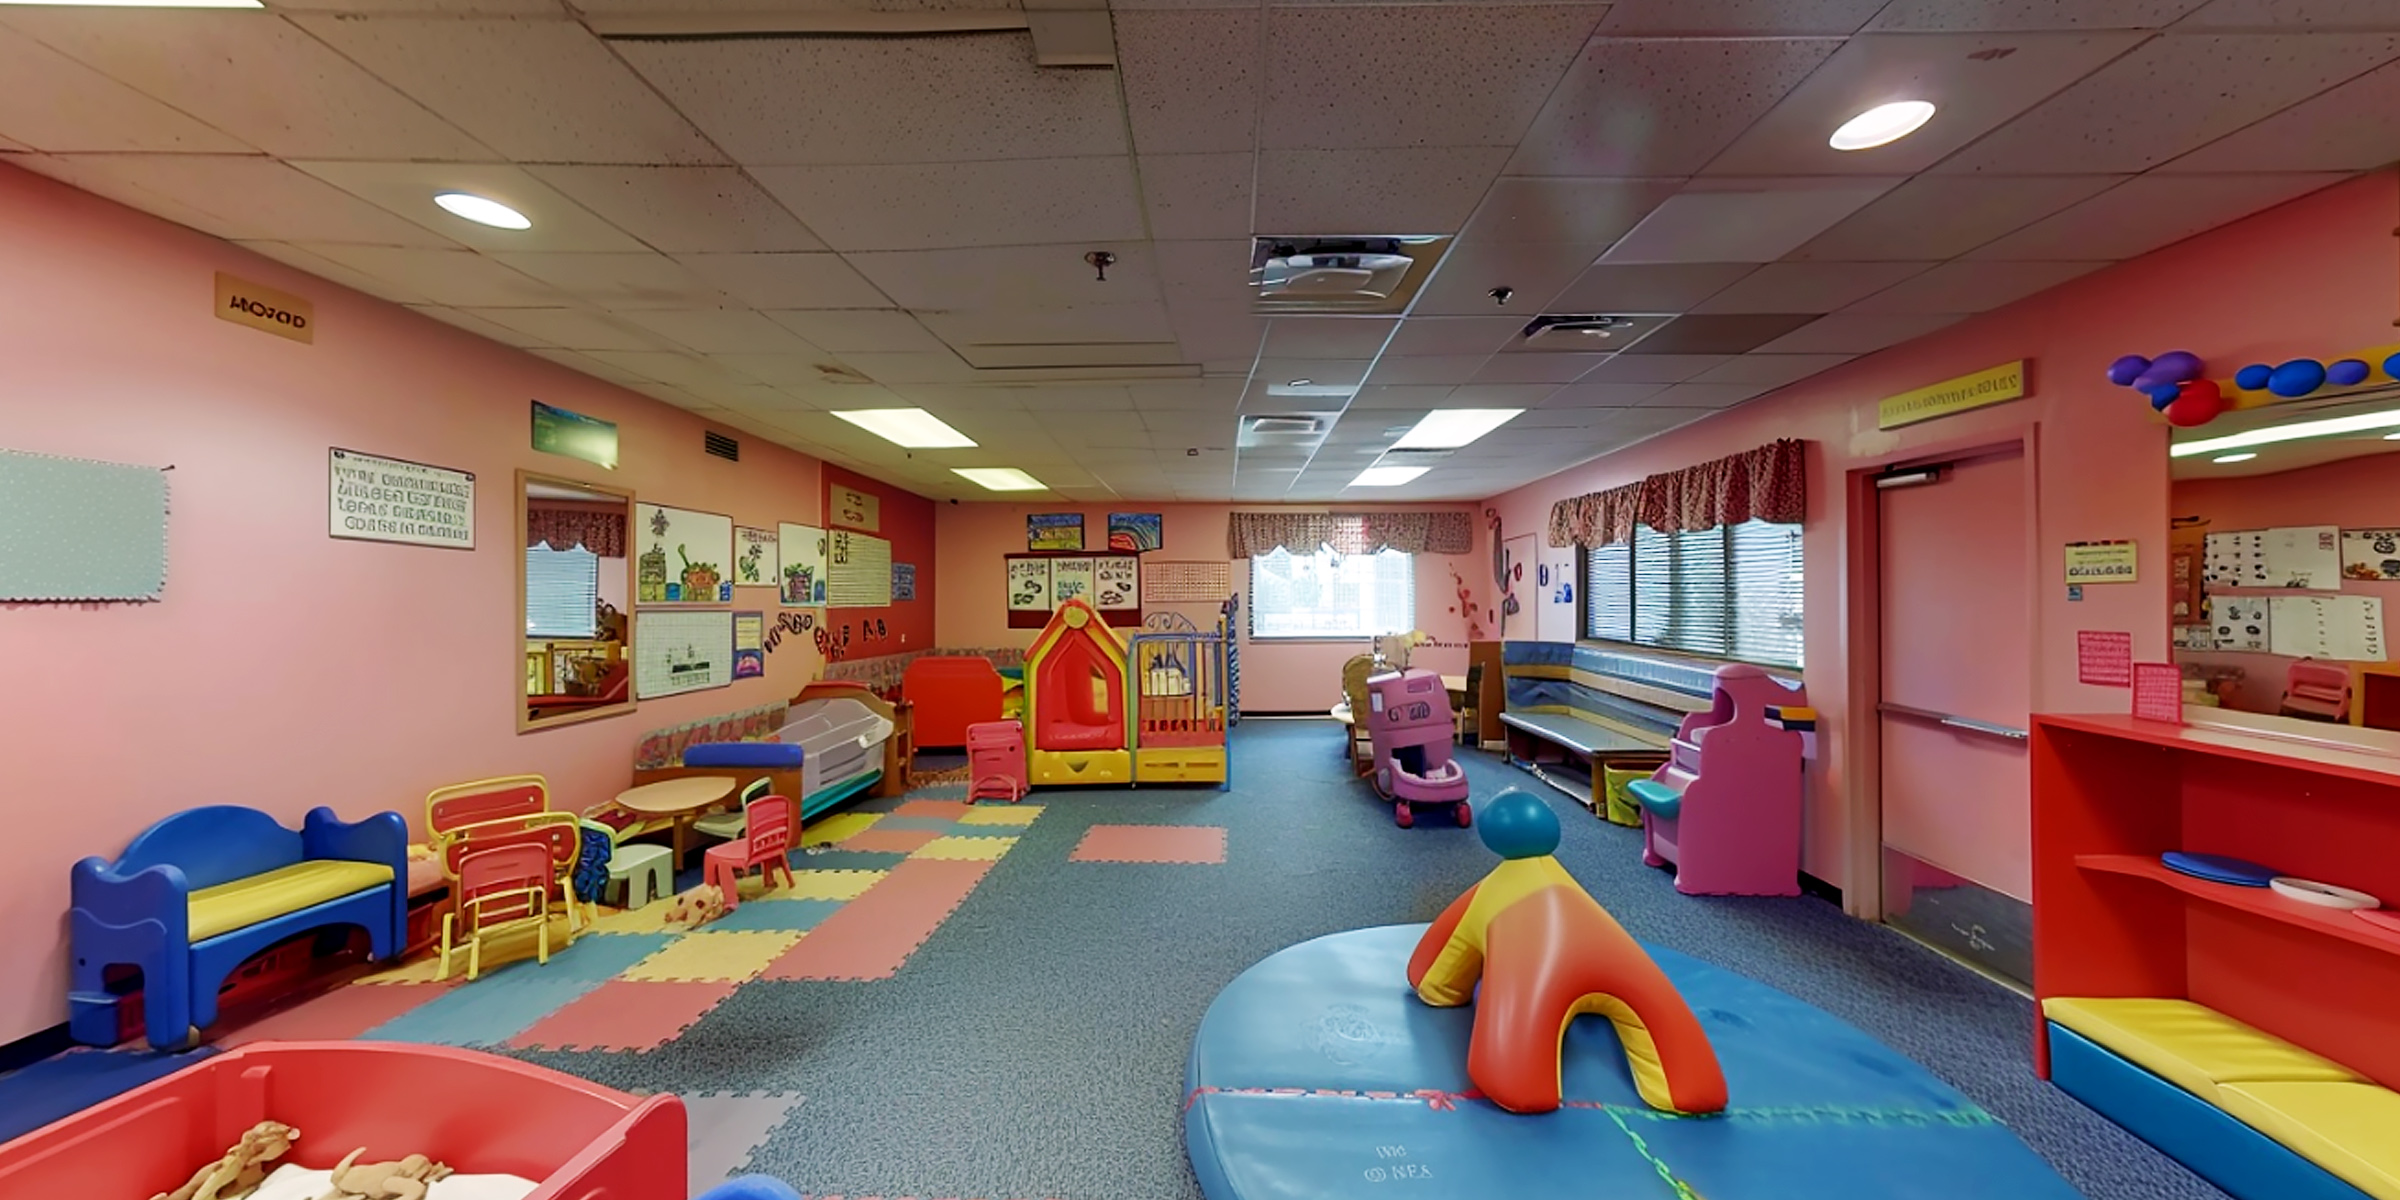 A daycare playroom | Source: AmoMama